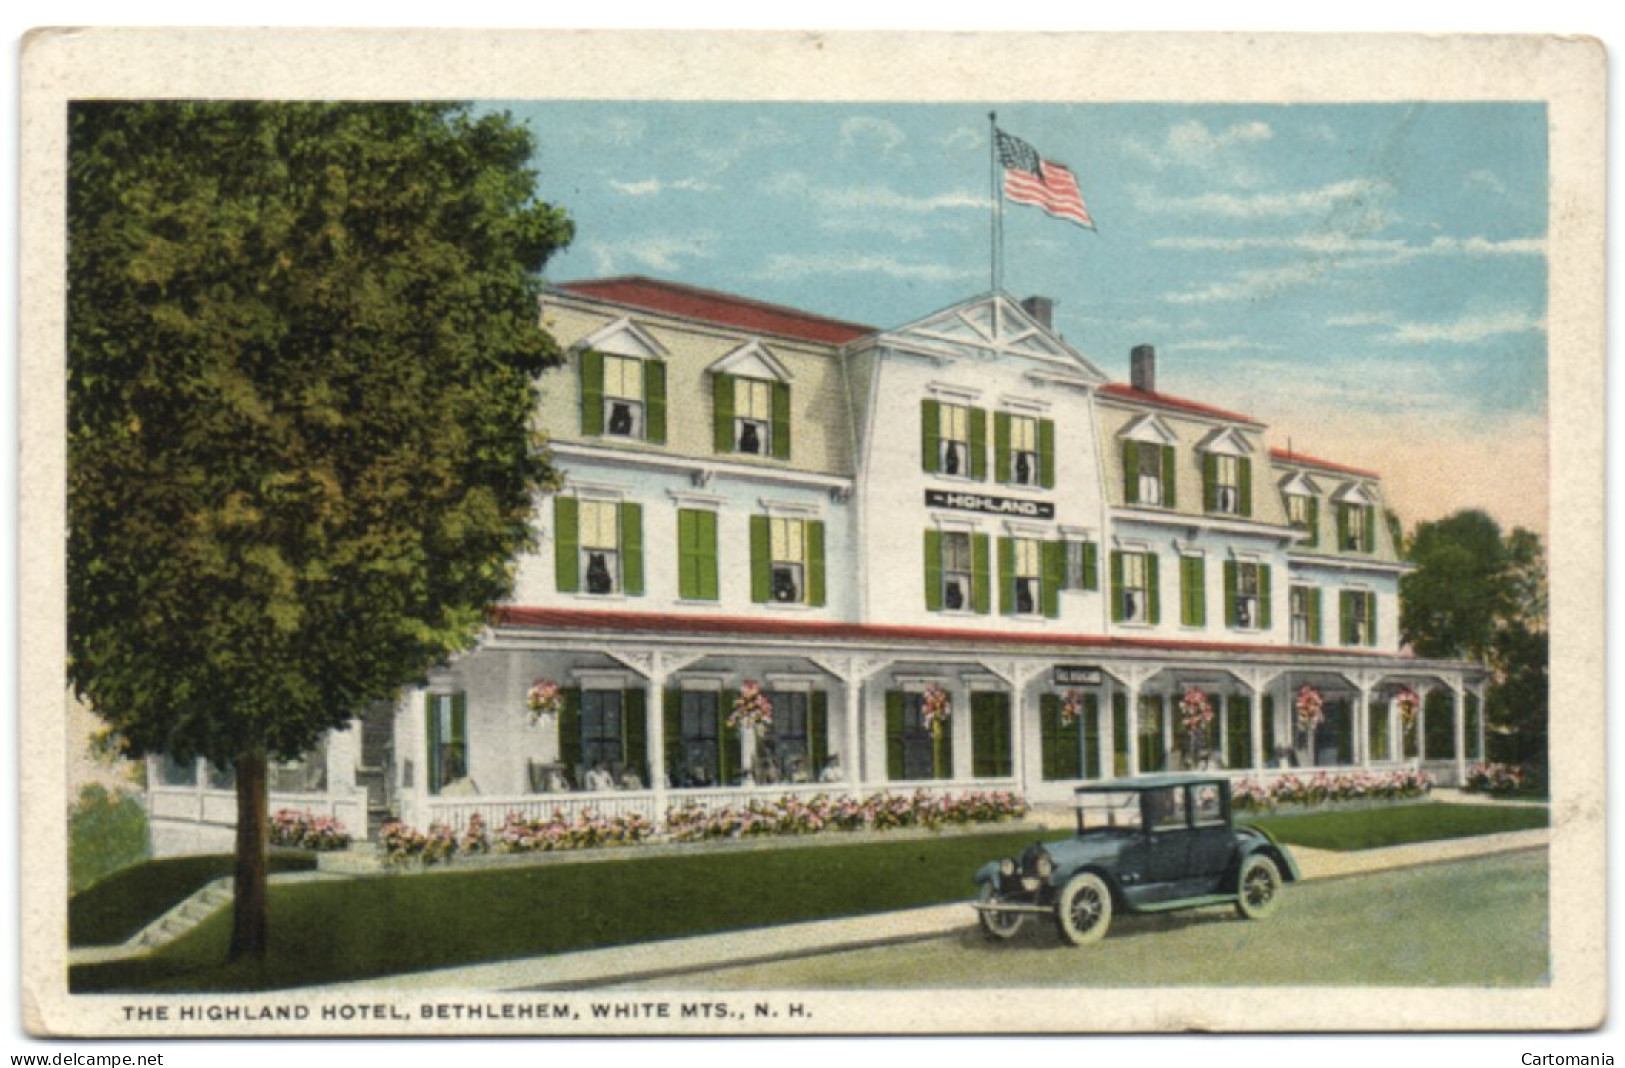 The Highland Hotel - Bethlehem - White MTS. - N.H. - White Mountains